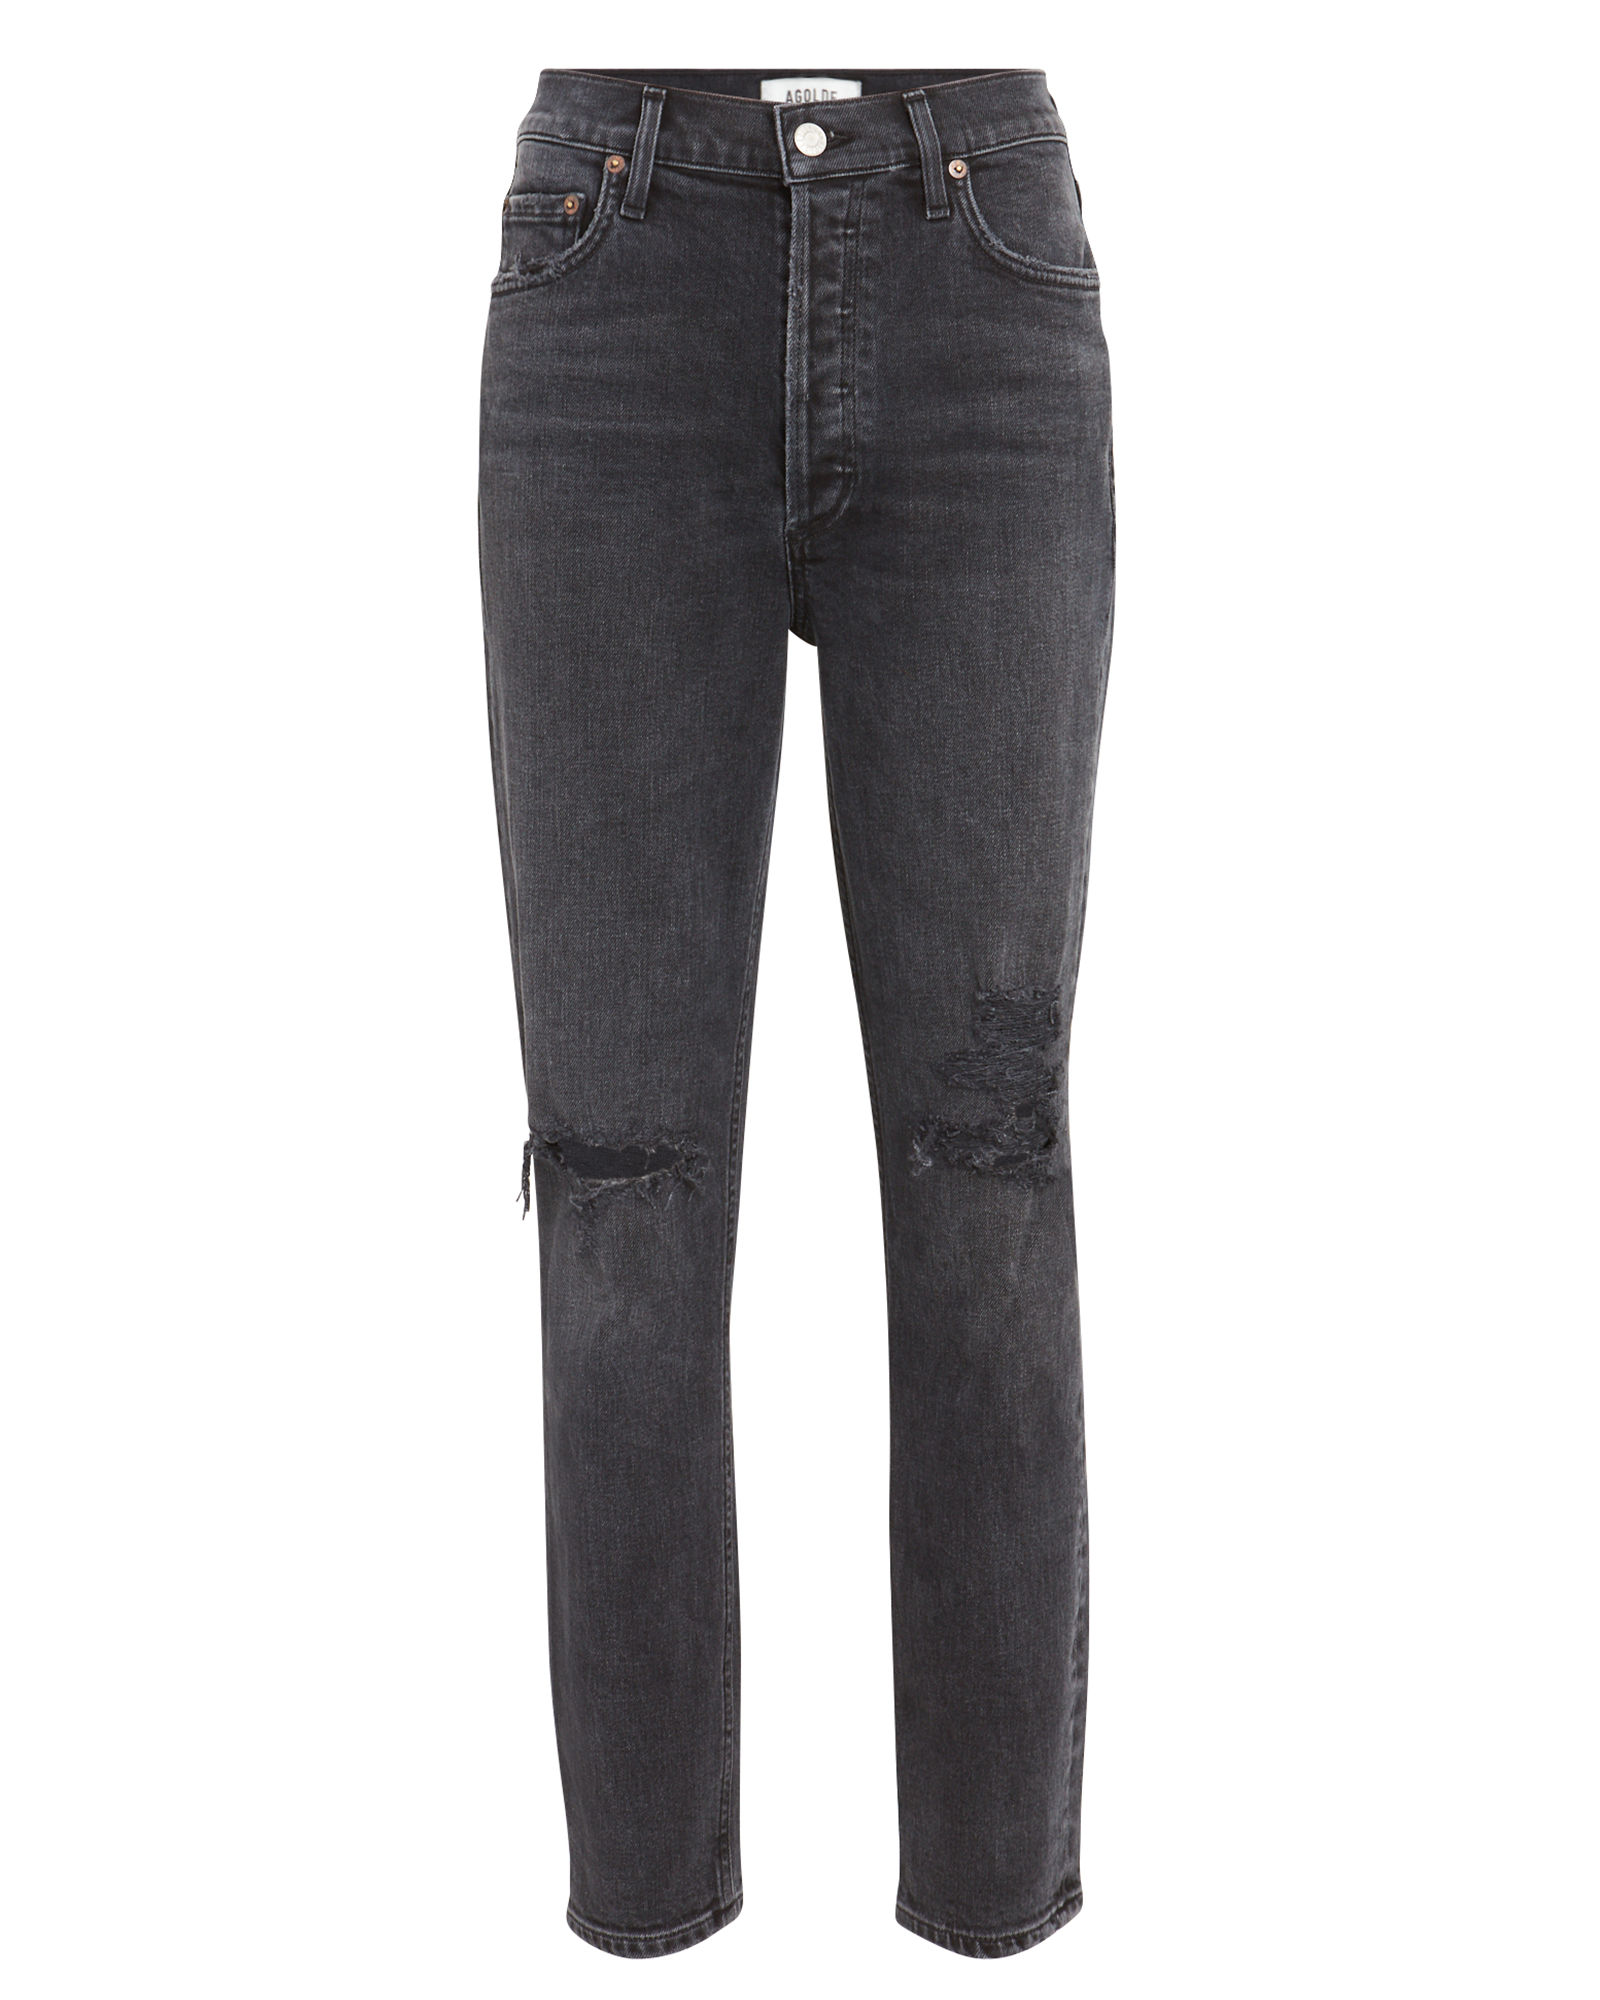 AGOLDE Nico High-Rise Skinny Jeans | INTERMIX®